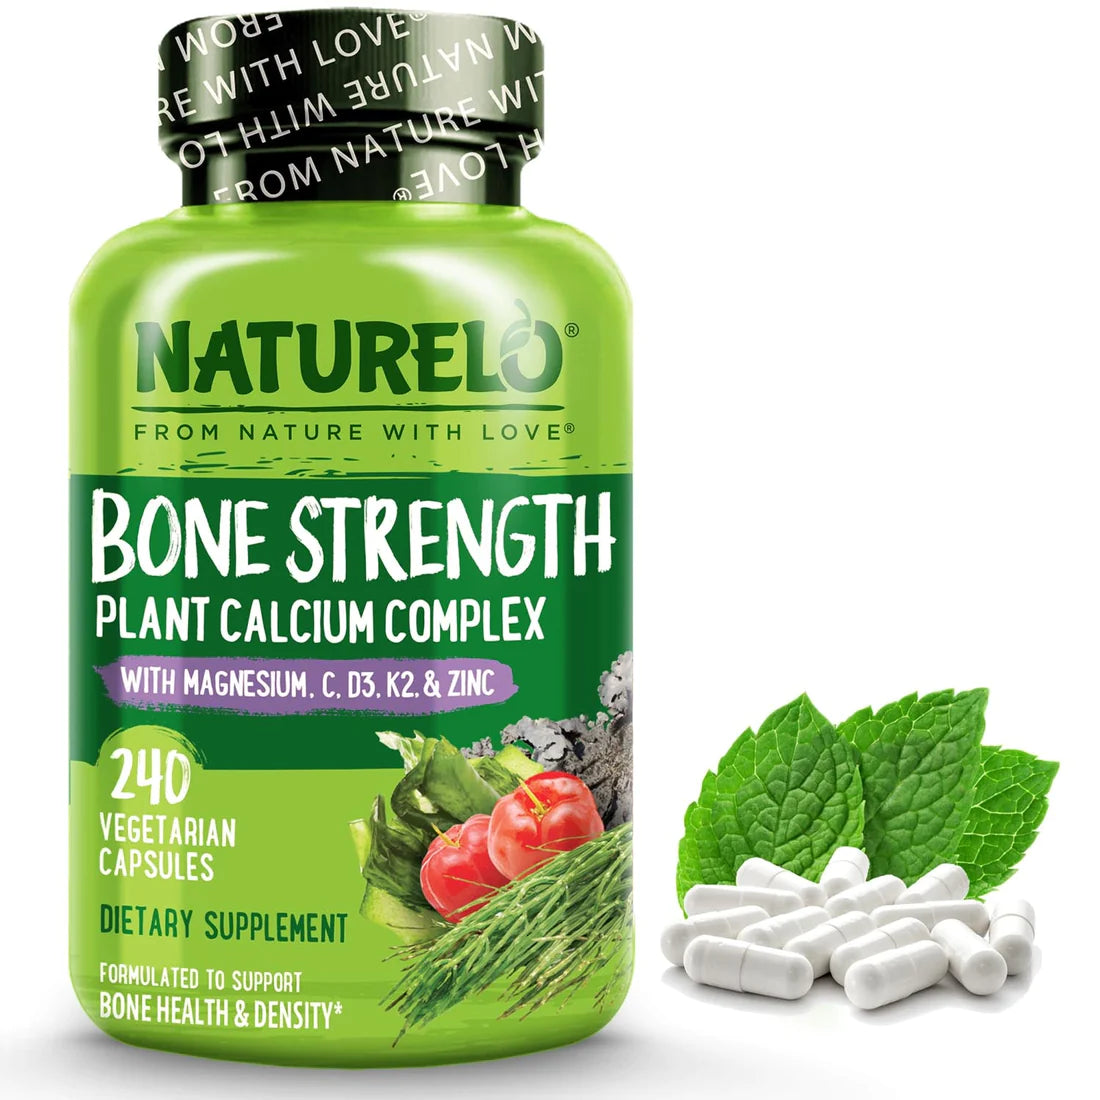 Bone Strength - Natural Calcium, D3 & K2 Supplement